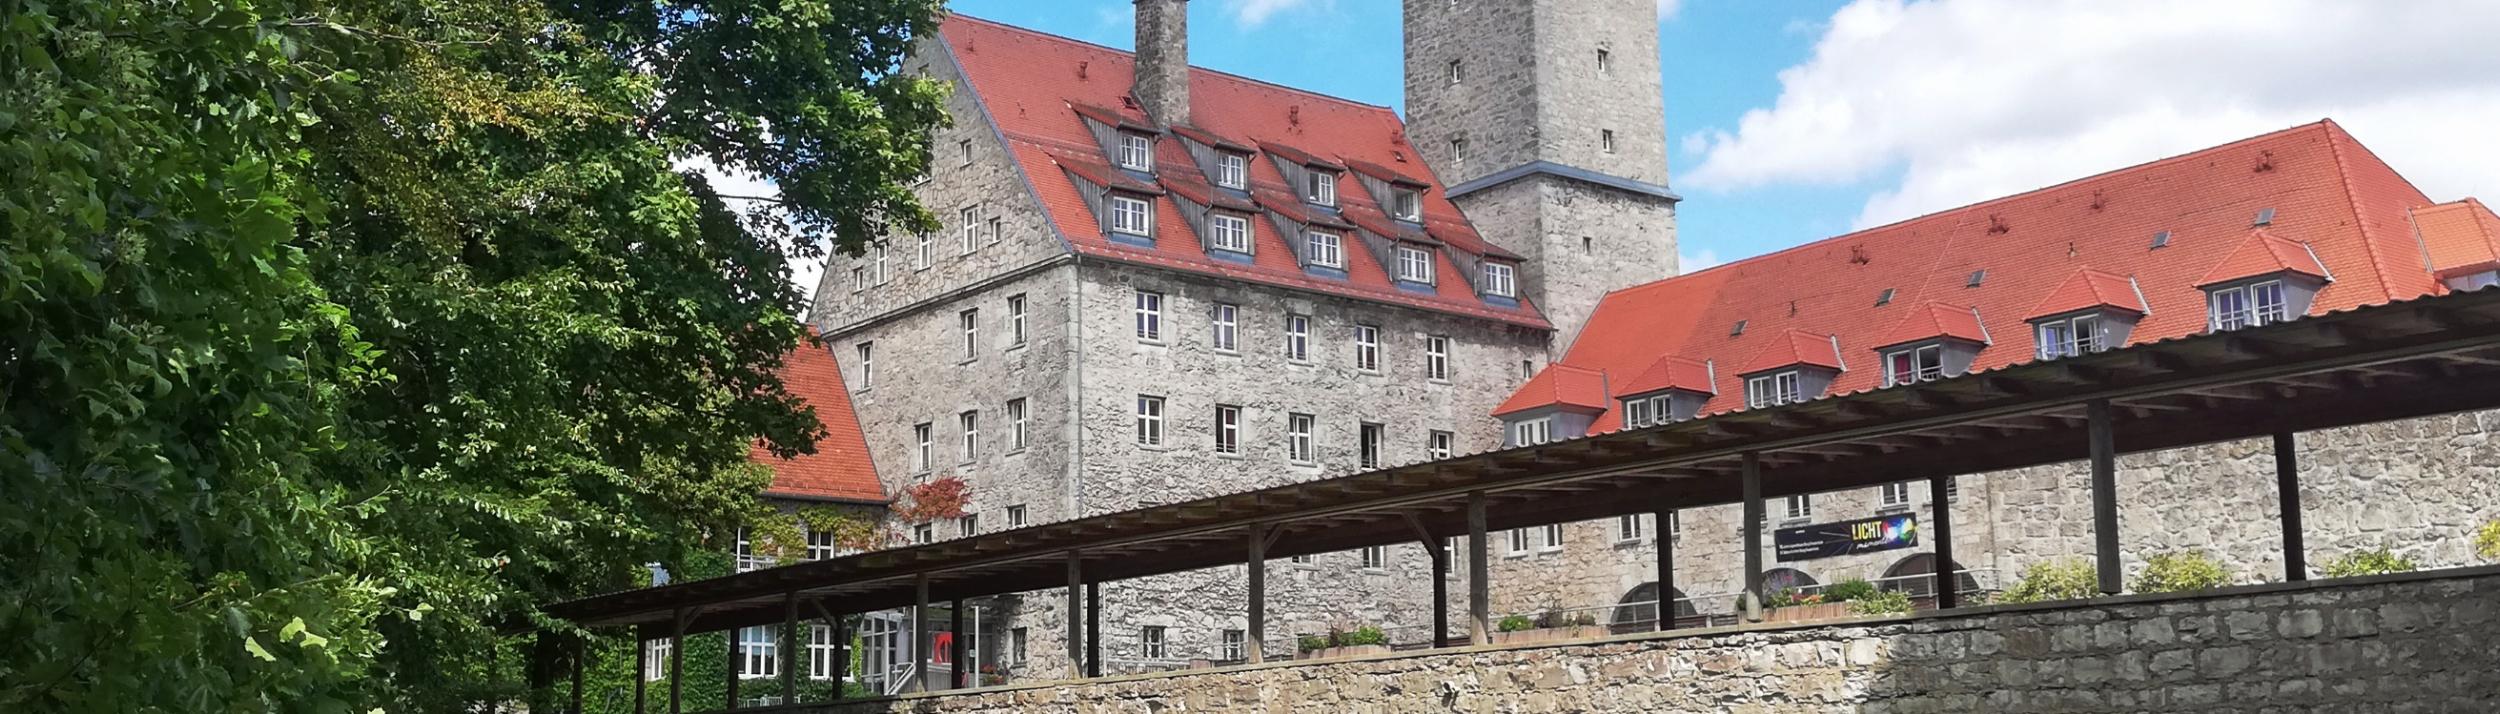 Burg Schmal